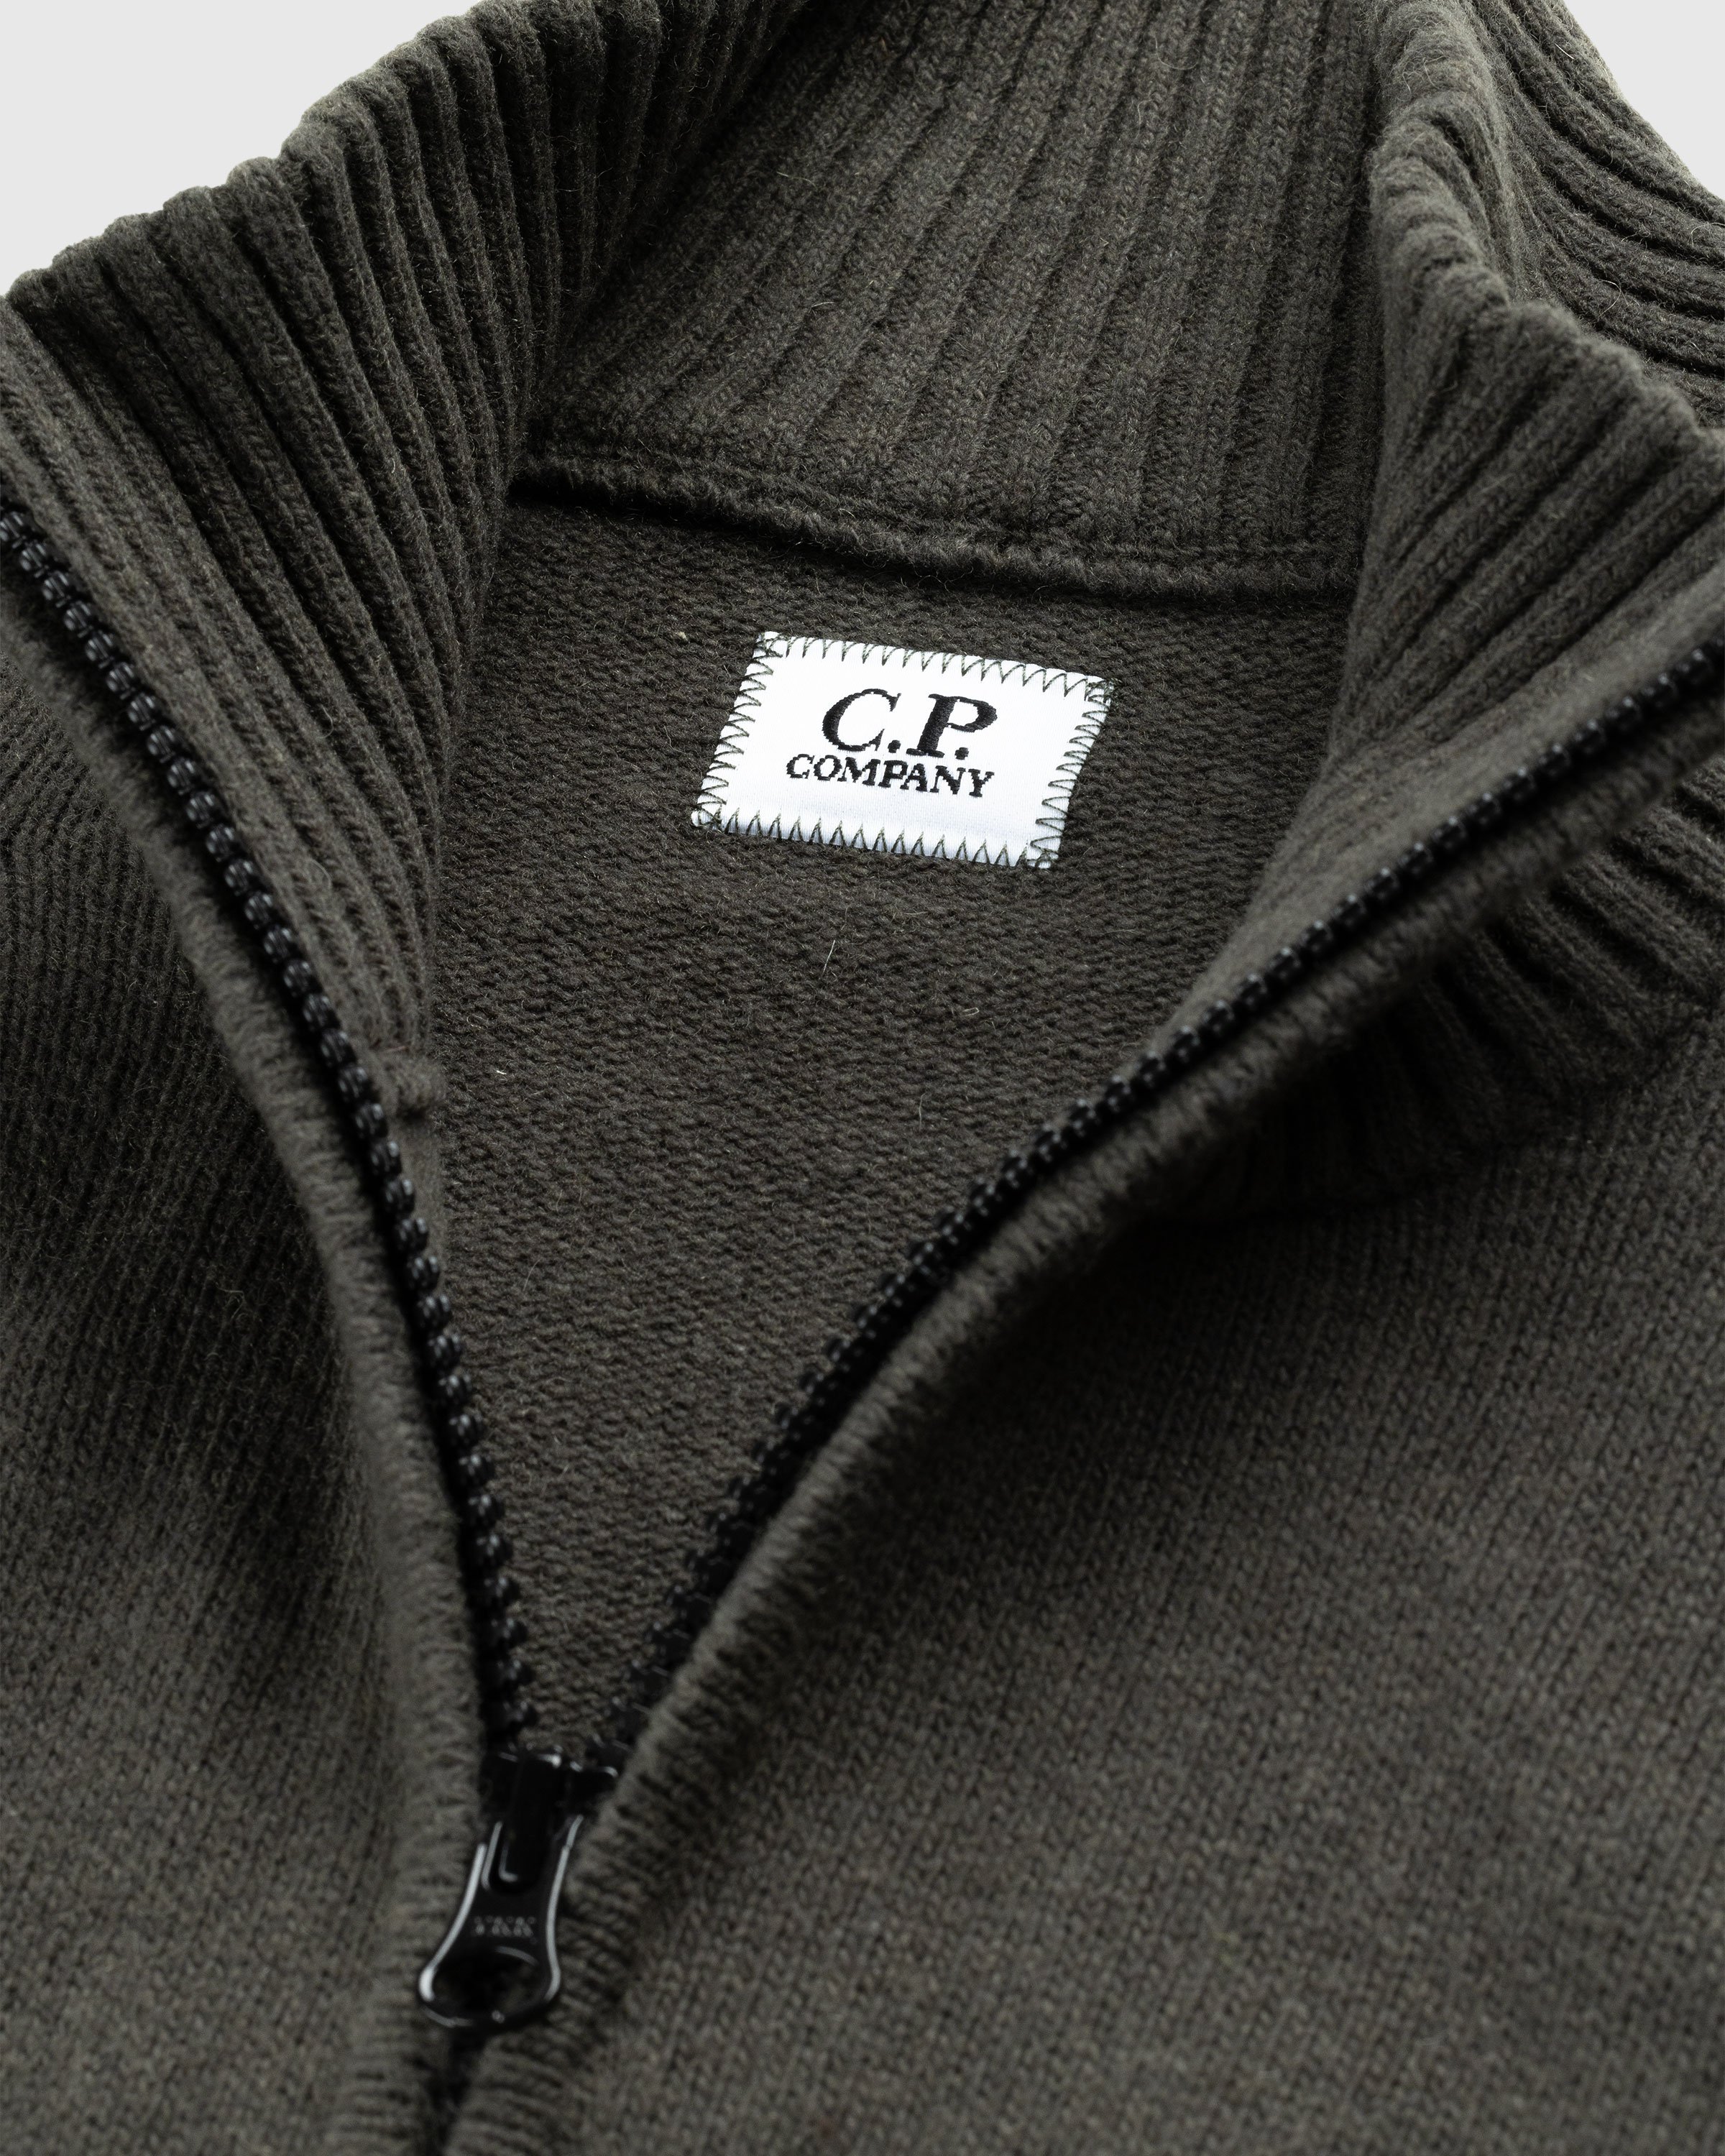 C.P. Company - Knitwear - Cardigan - Clothing - Green - Image 5